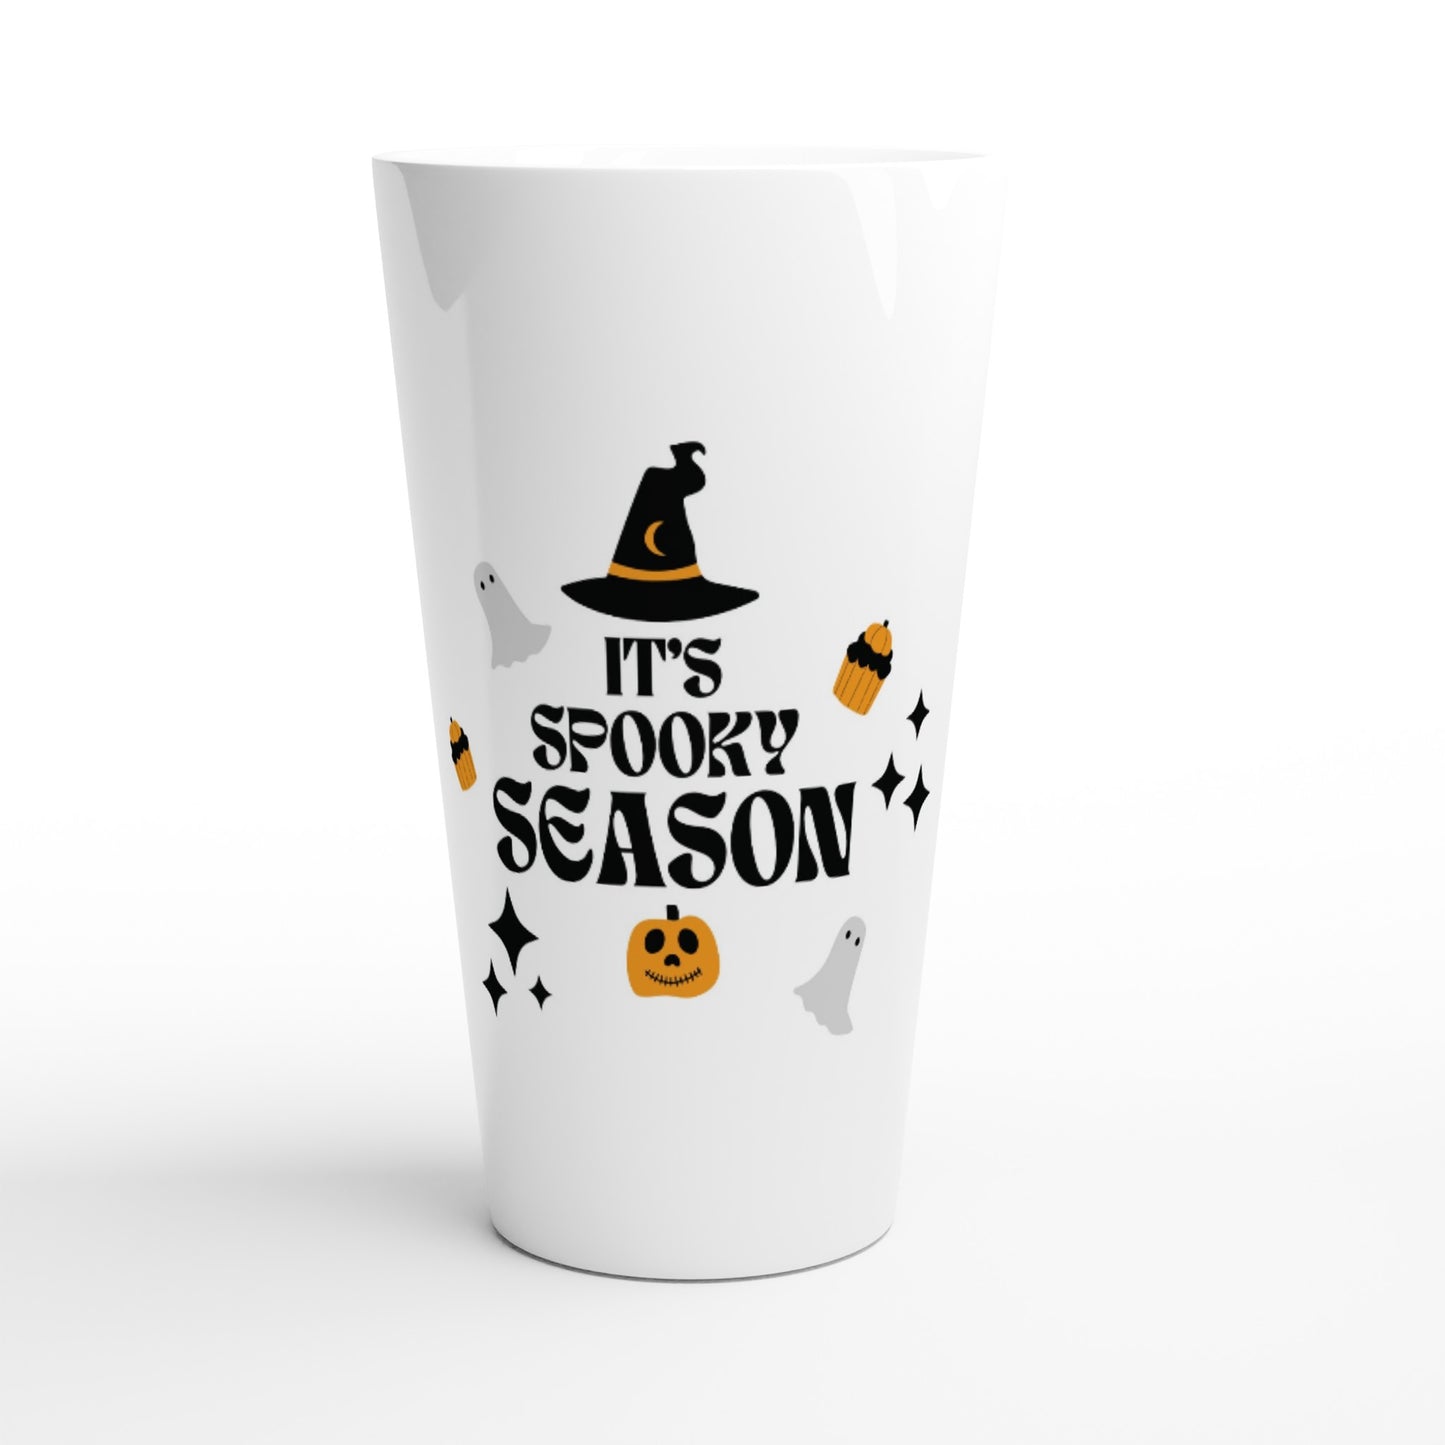 It's Spooky Season - White Latte 17oz Ceramic Mug